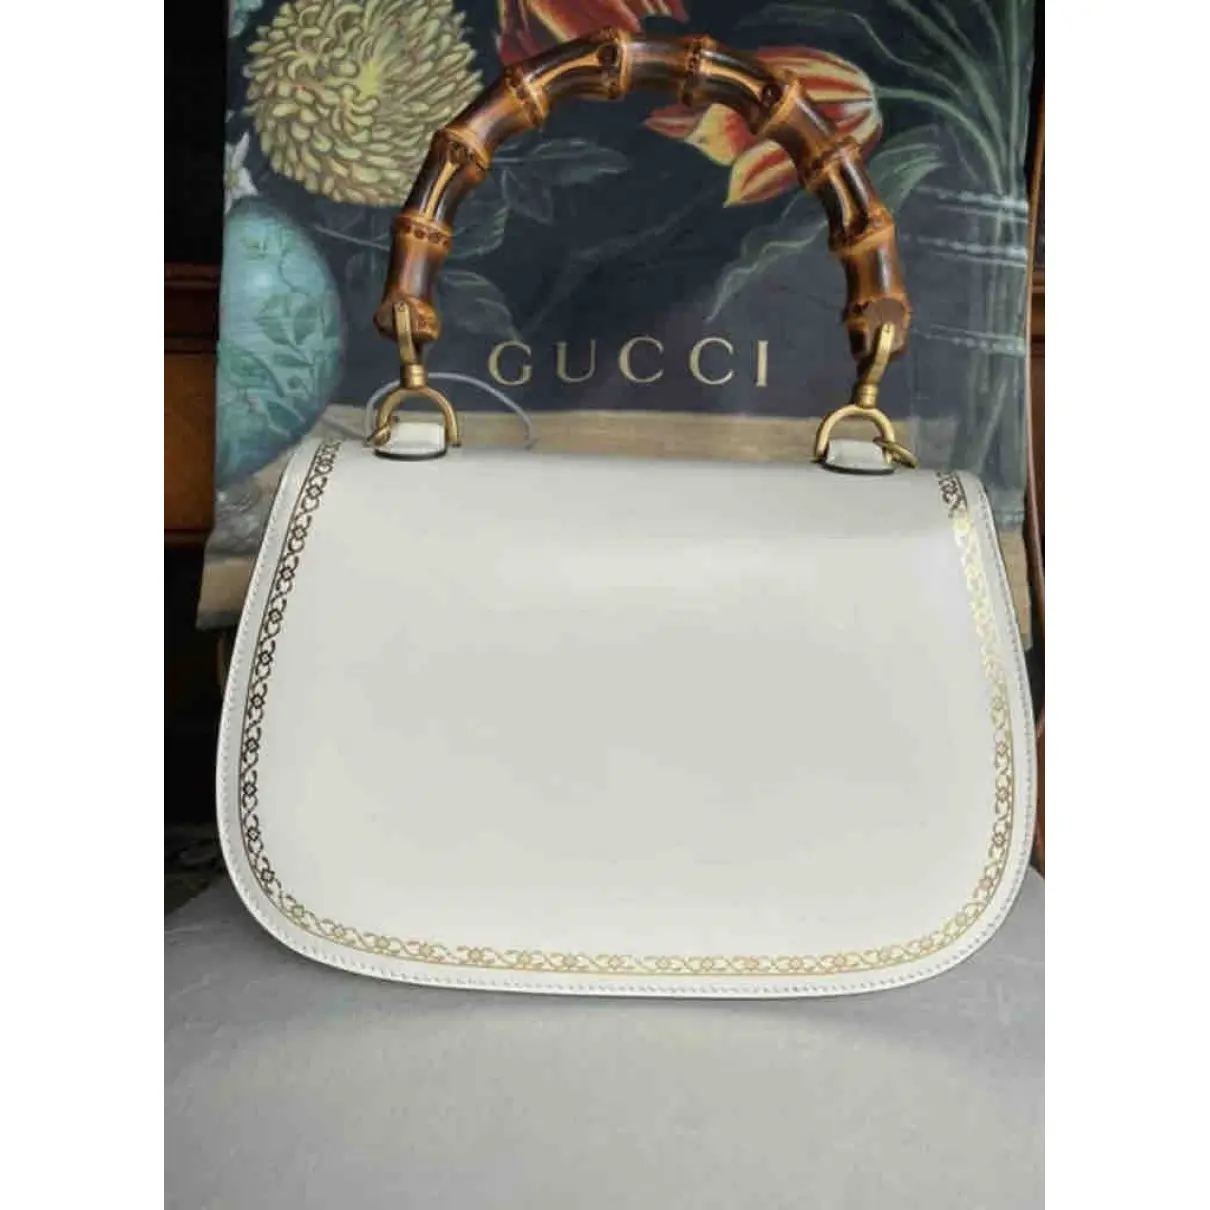 Buy Gucci Convertible Bamboo Top Handle leather handbag online